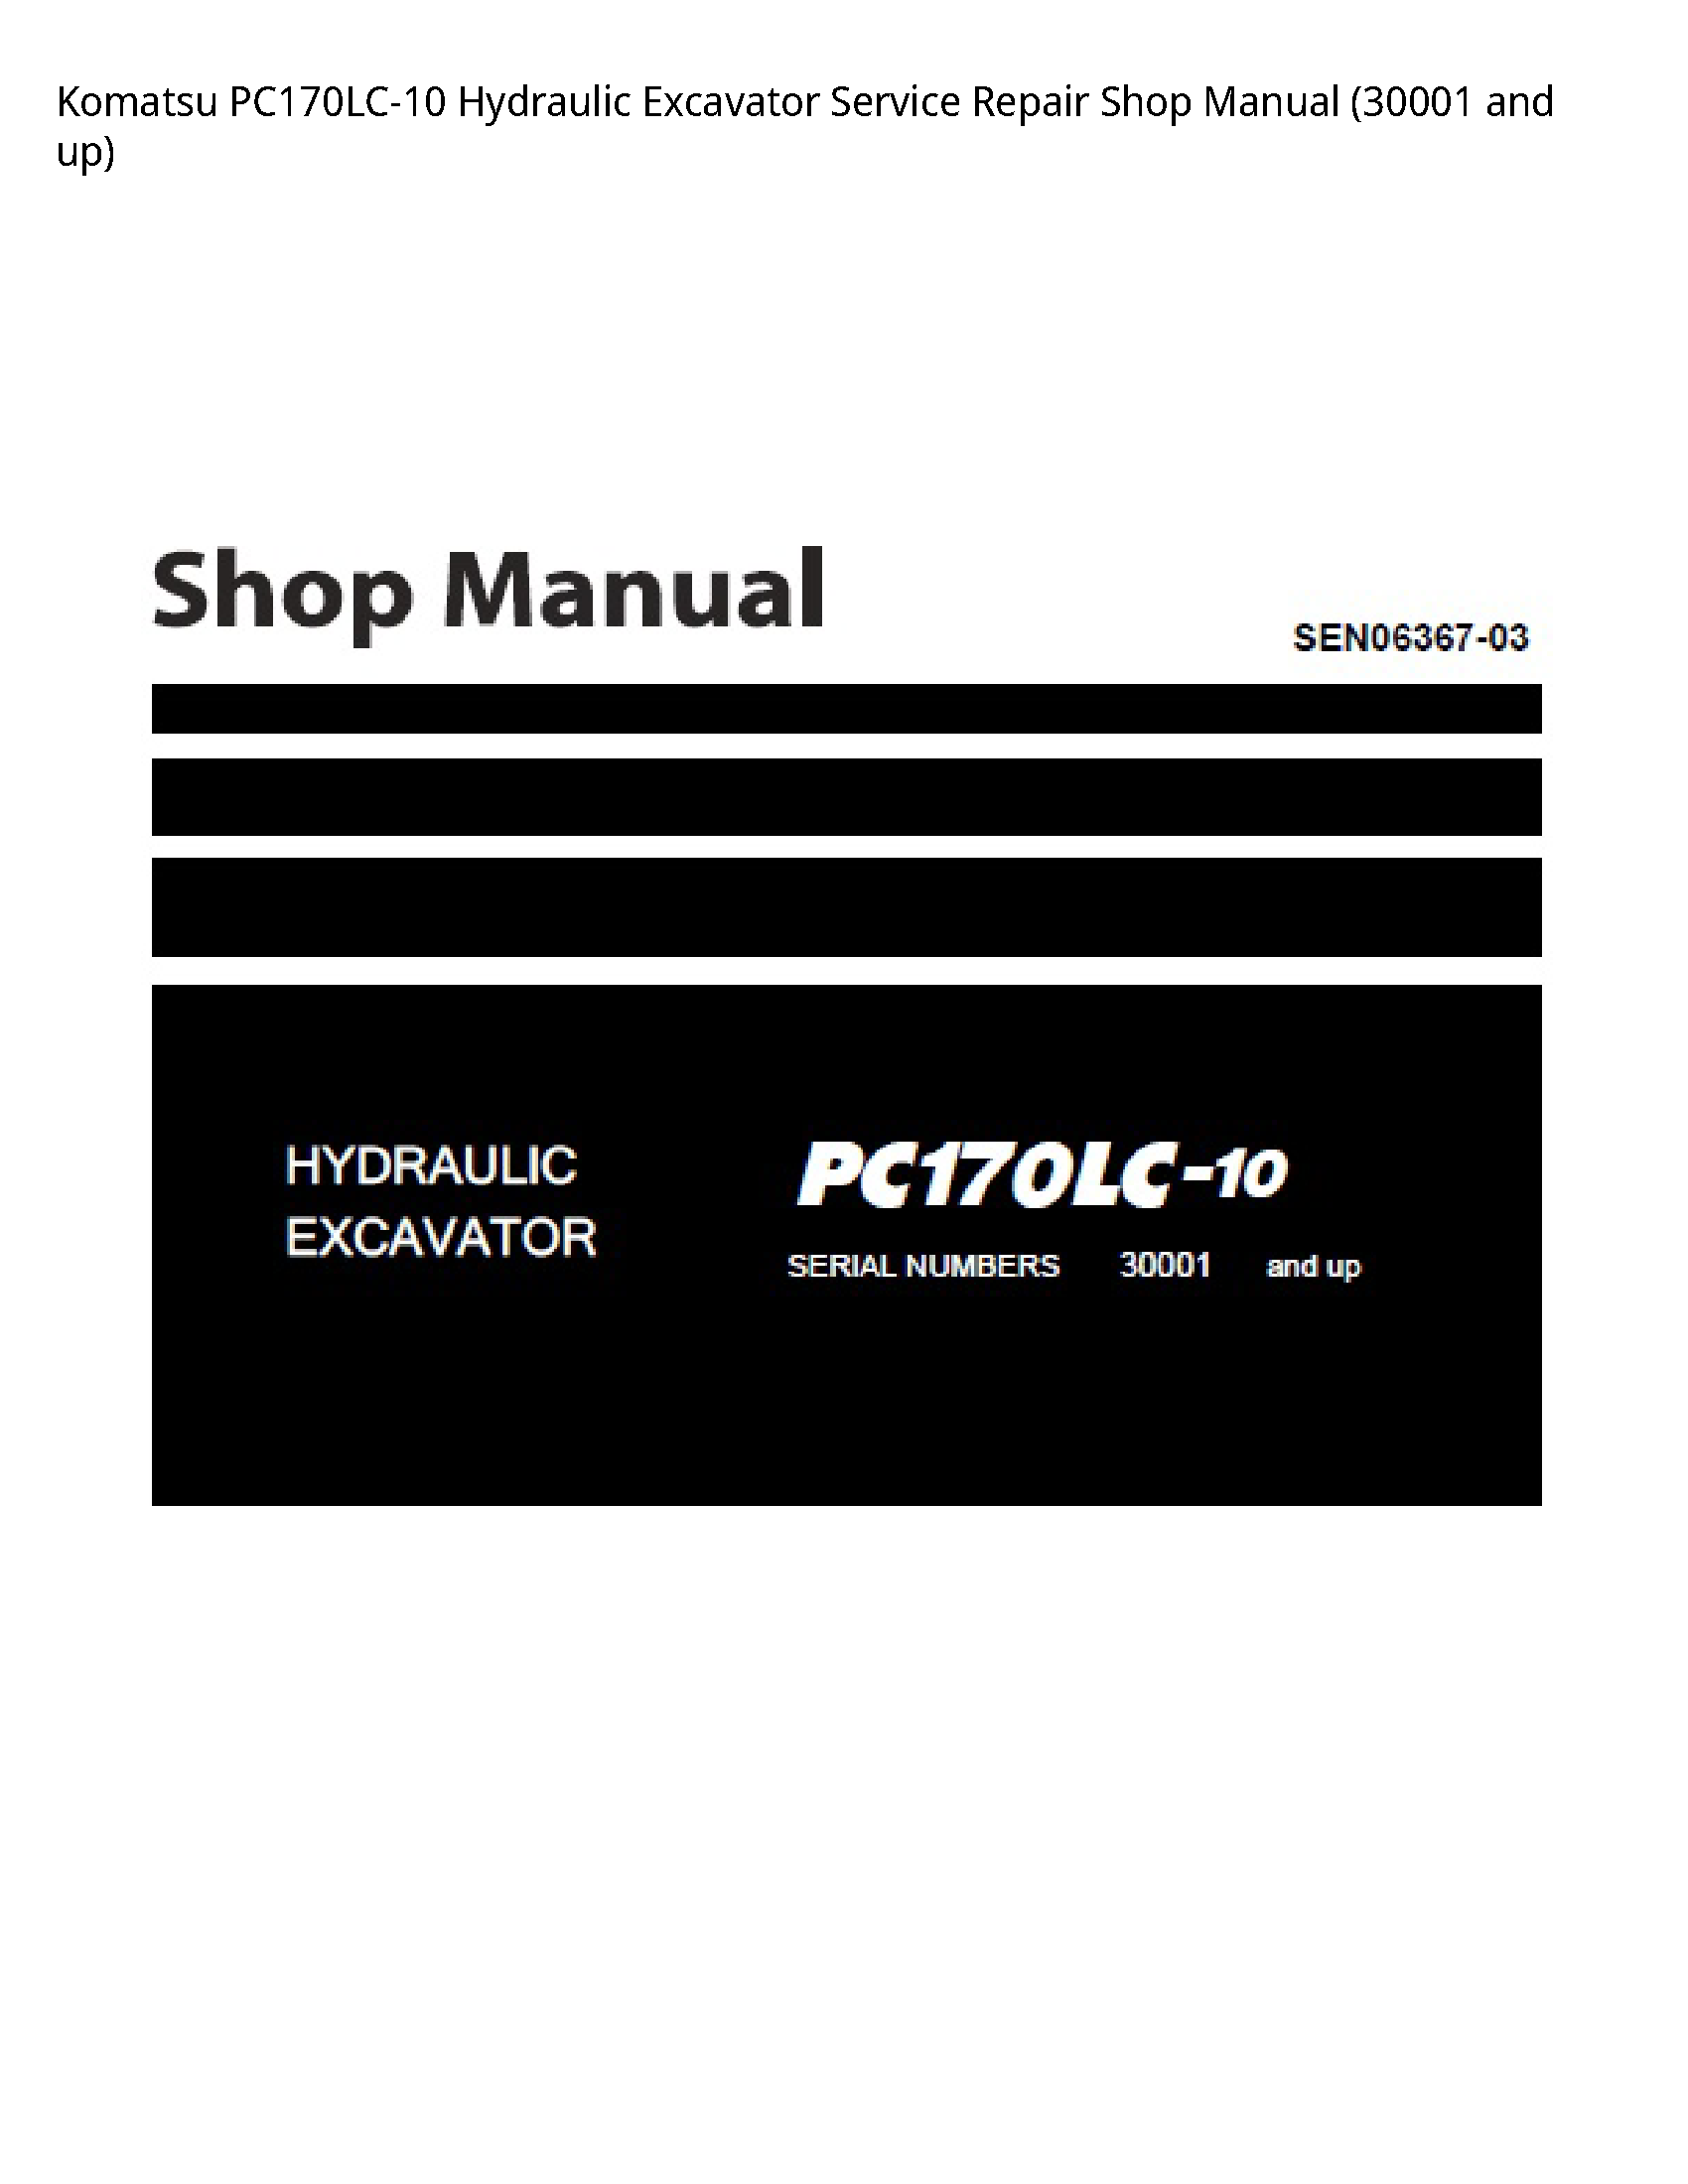 Komatsu PC170LC-10 Hydraulic Excavator Service Repair Shop Manual (30001 and up)